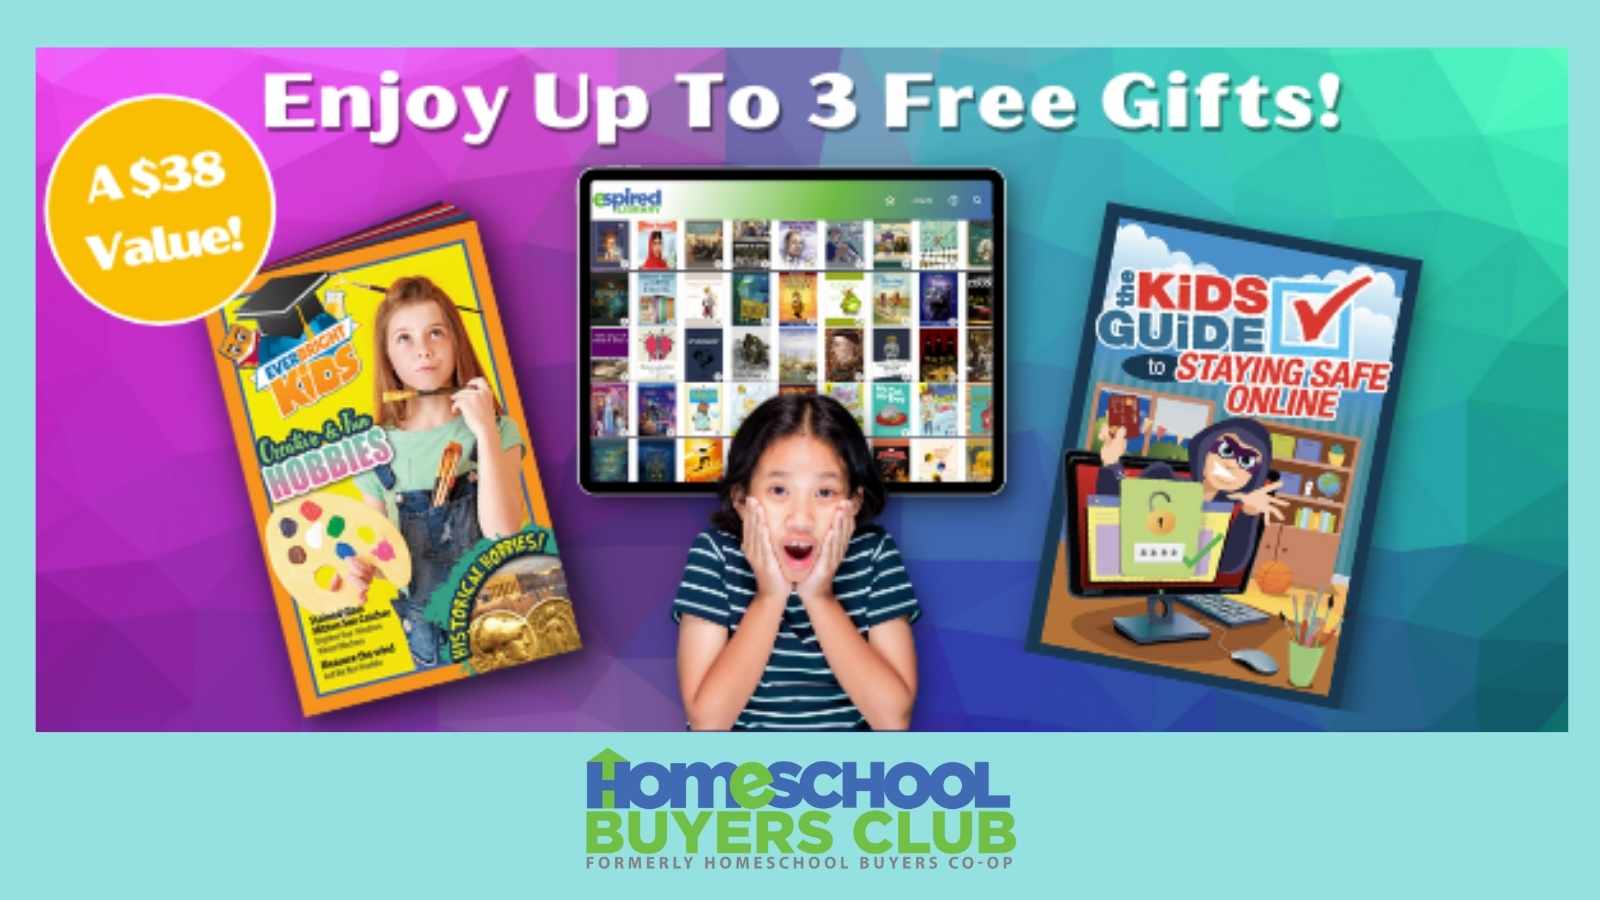 homeschool buyers club free gifts